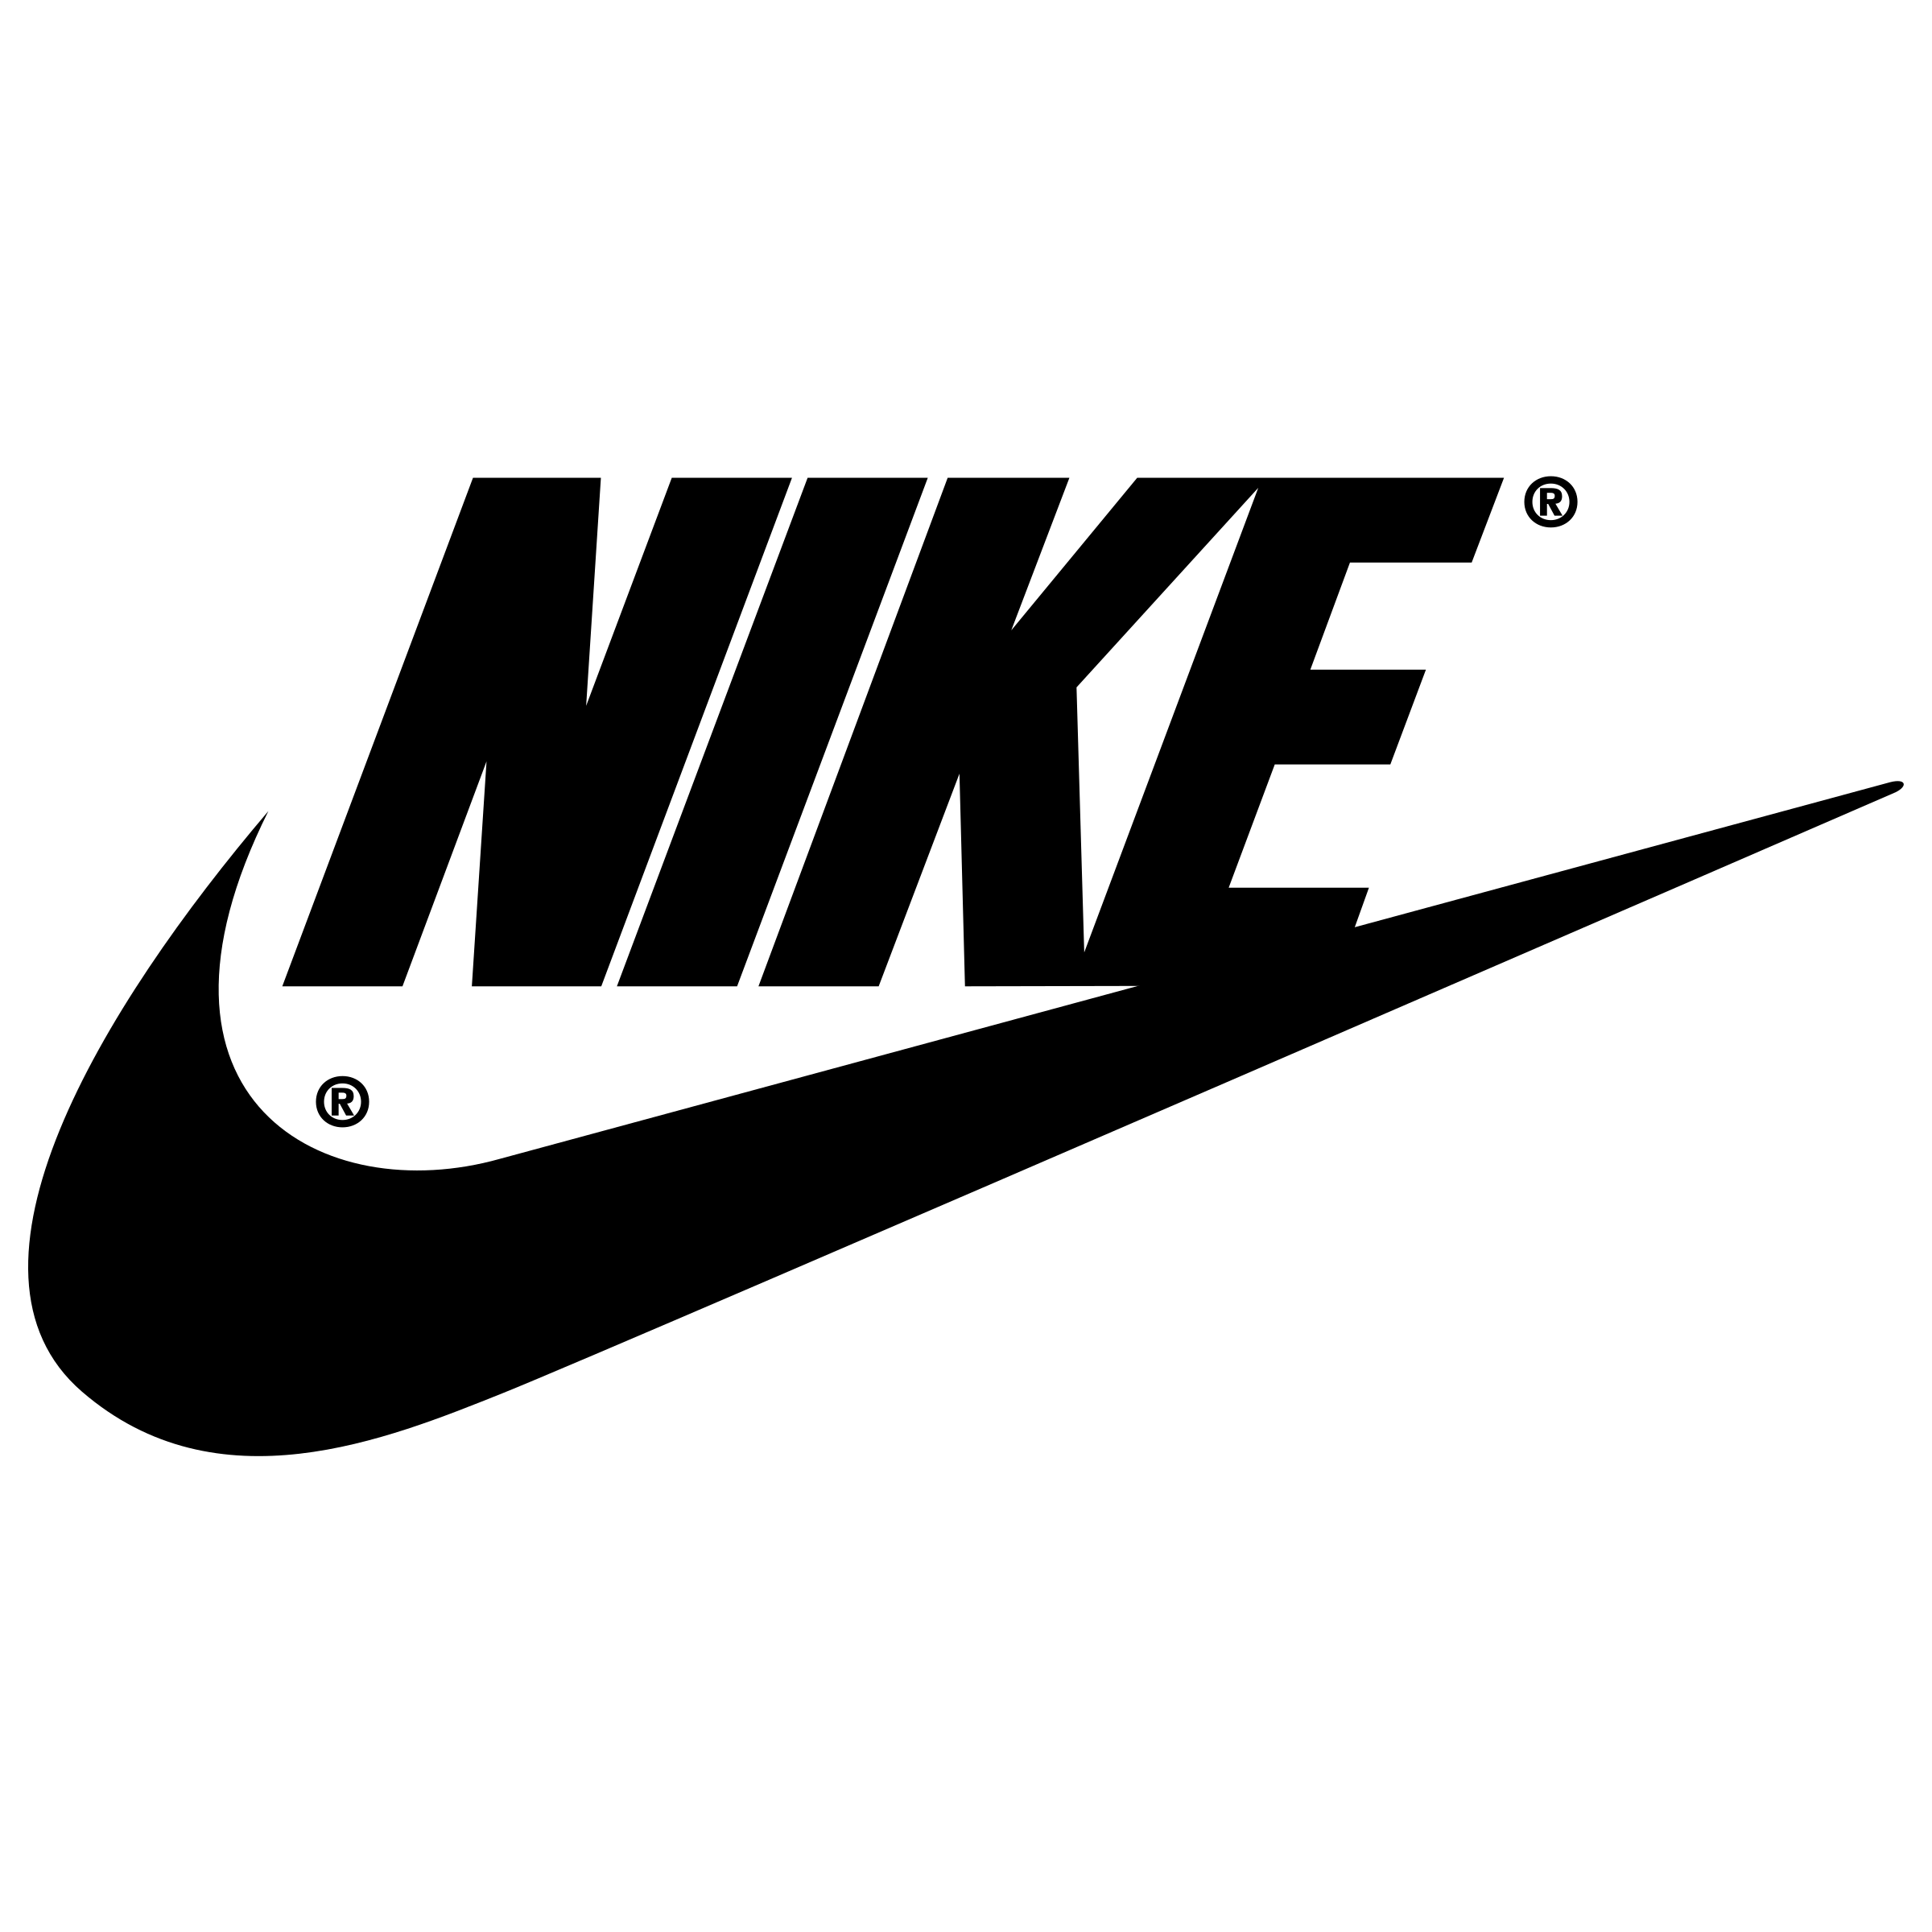 nike-logo-vector-png-2.png